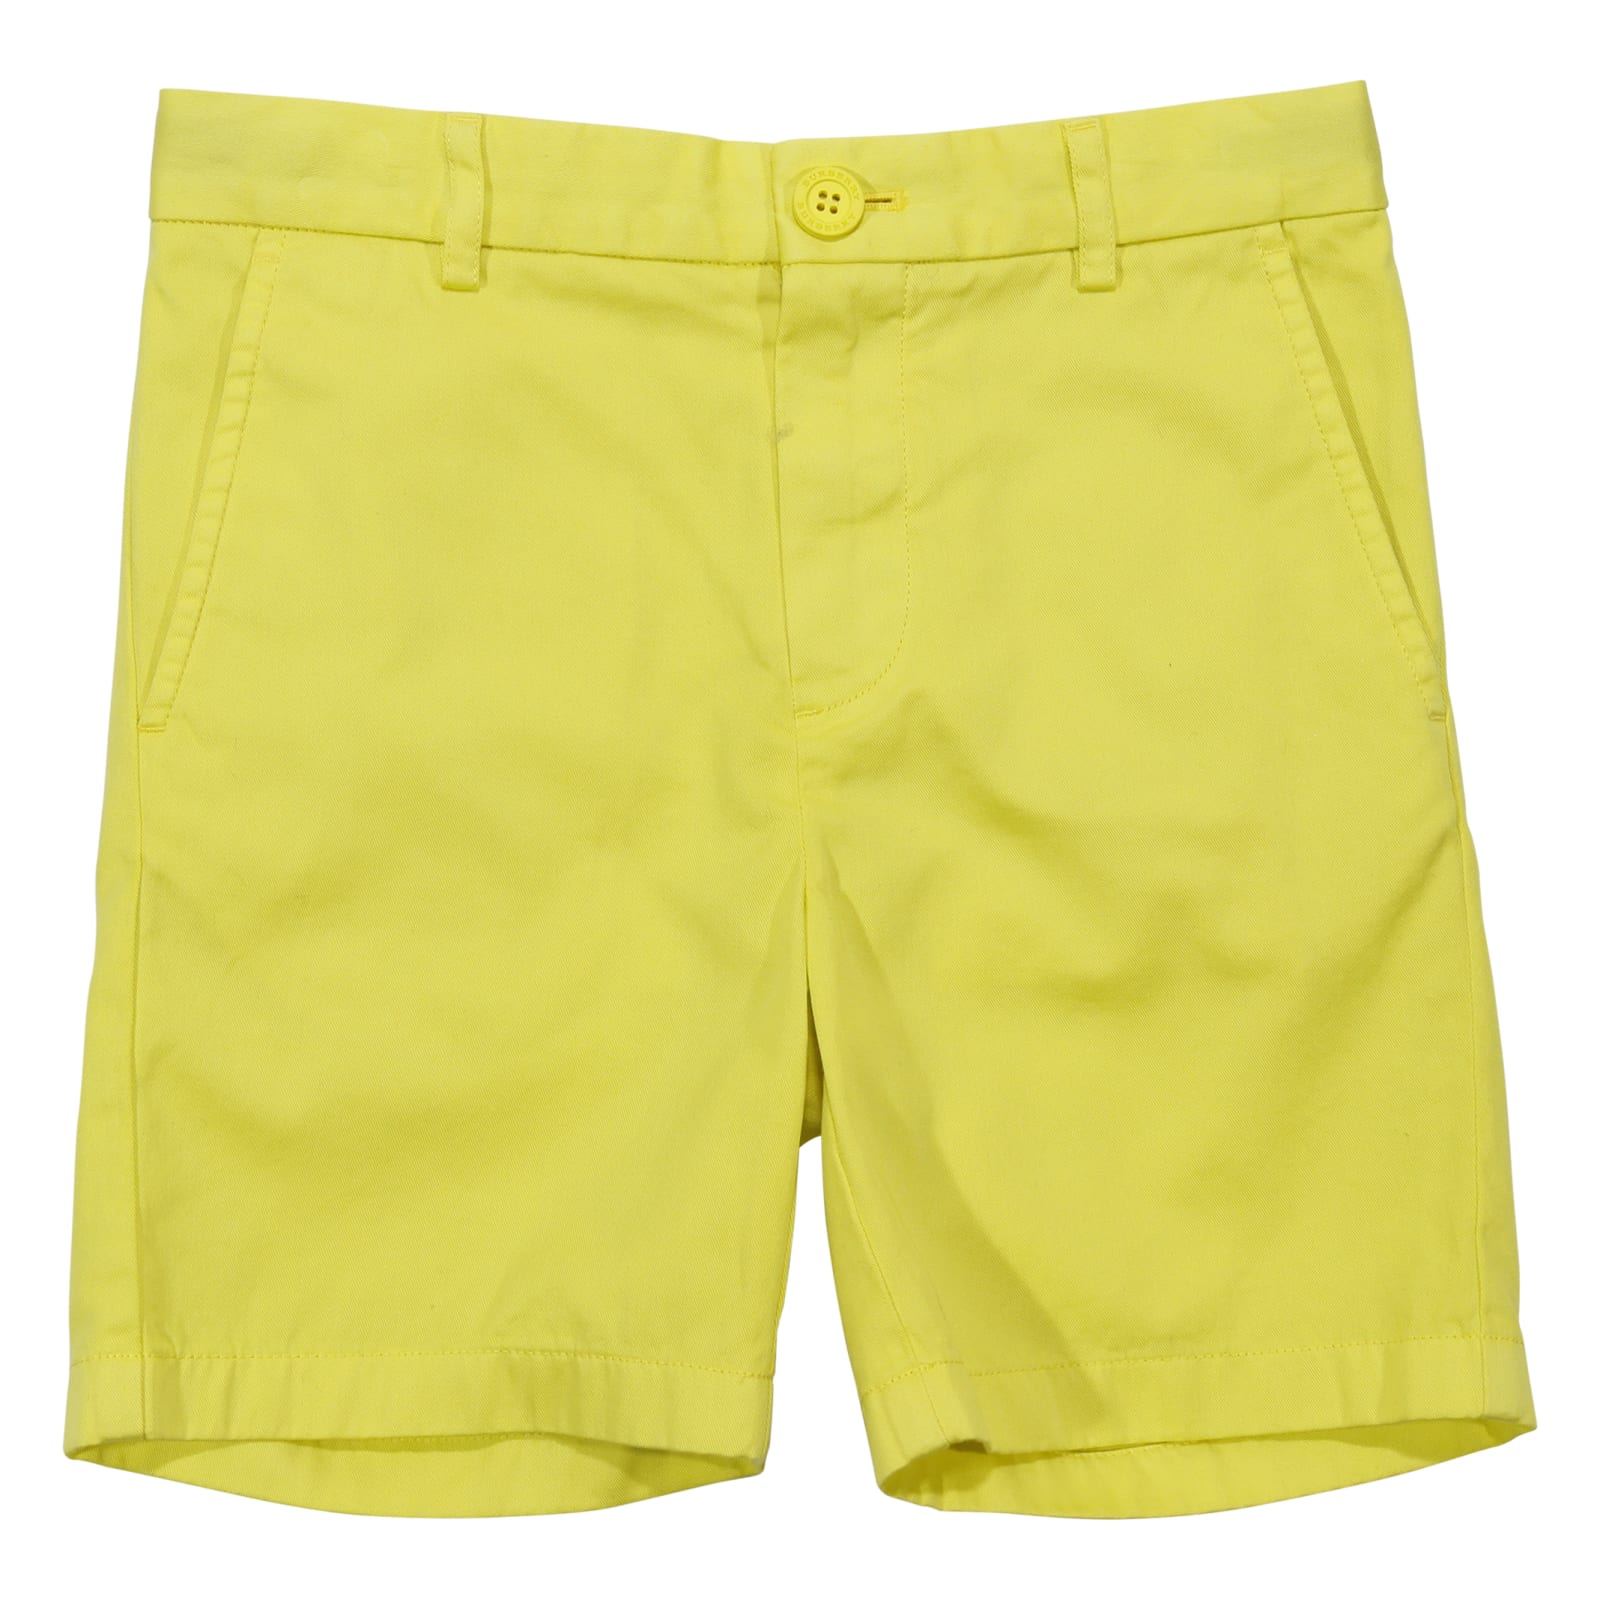 burberry shorts yellow